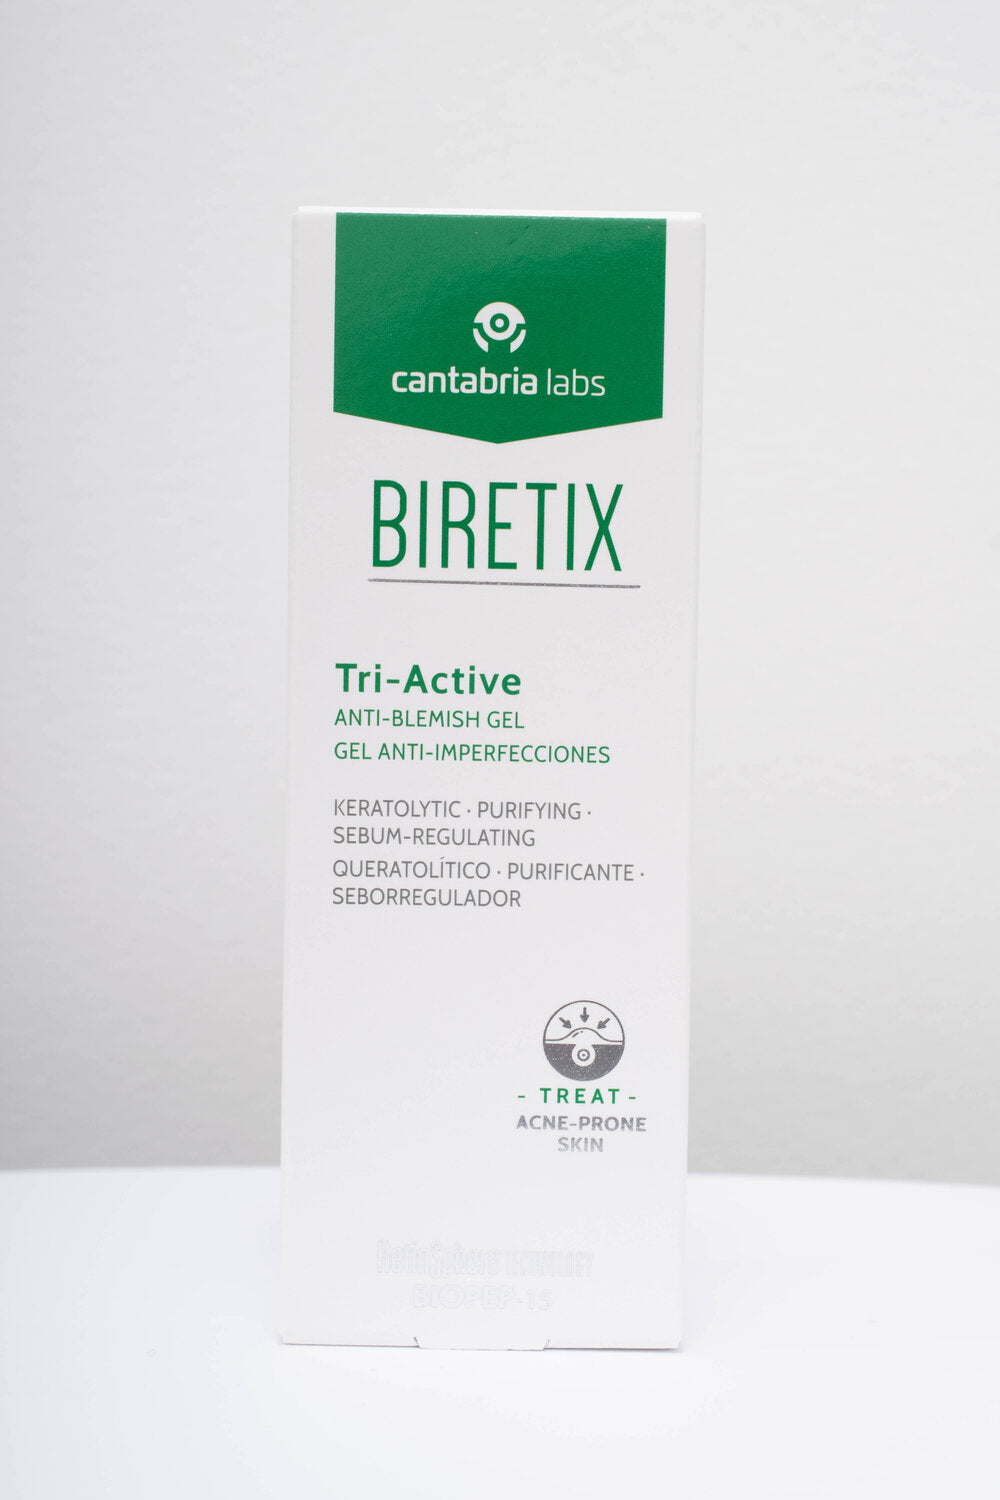 Biretrix: Tri-Active Gel